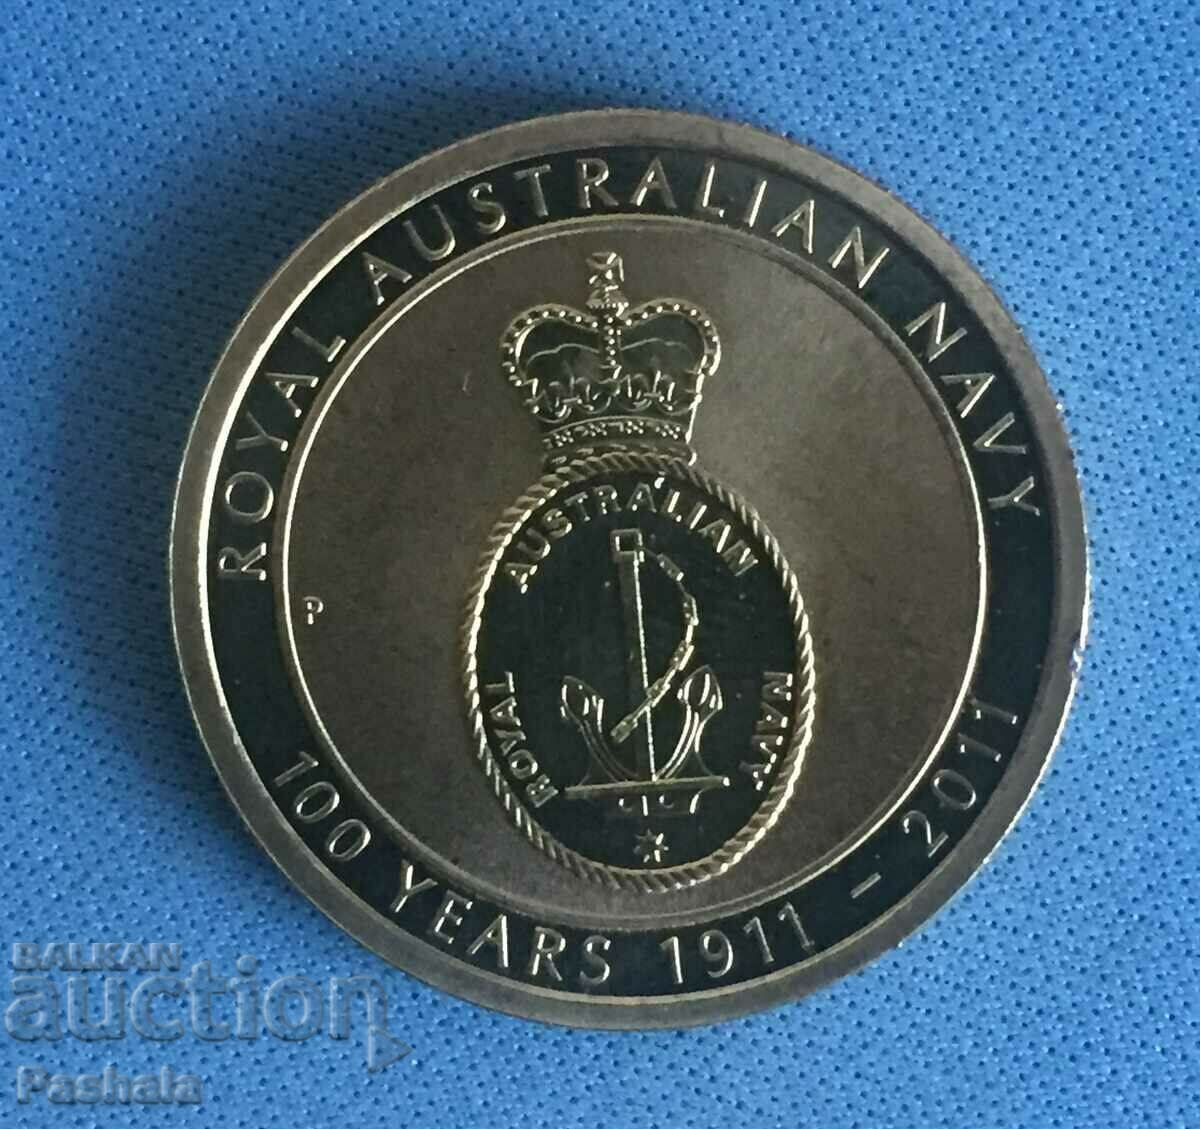 Australia 1 USD 2011